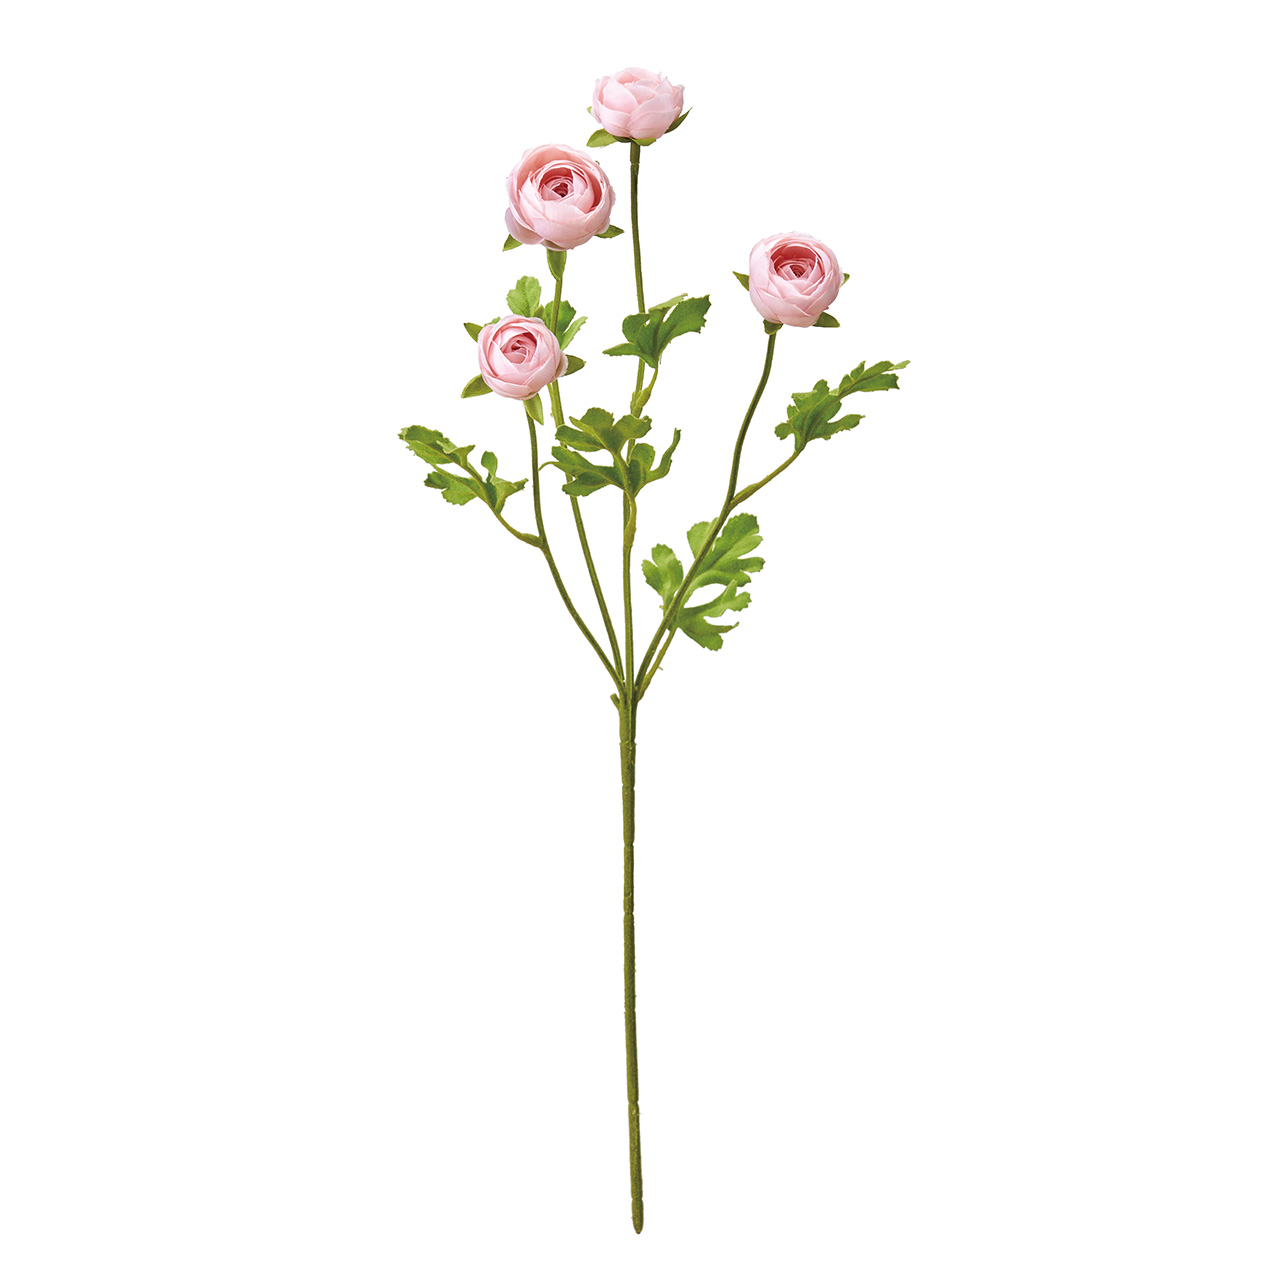 MAGIQ　グローブラナンキュラス　ライトピンク　アーティフィシャルフラワー　造花　ラナンキュラス　FM004777-002